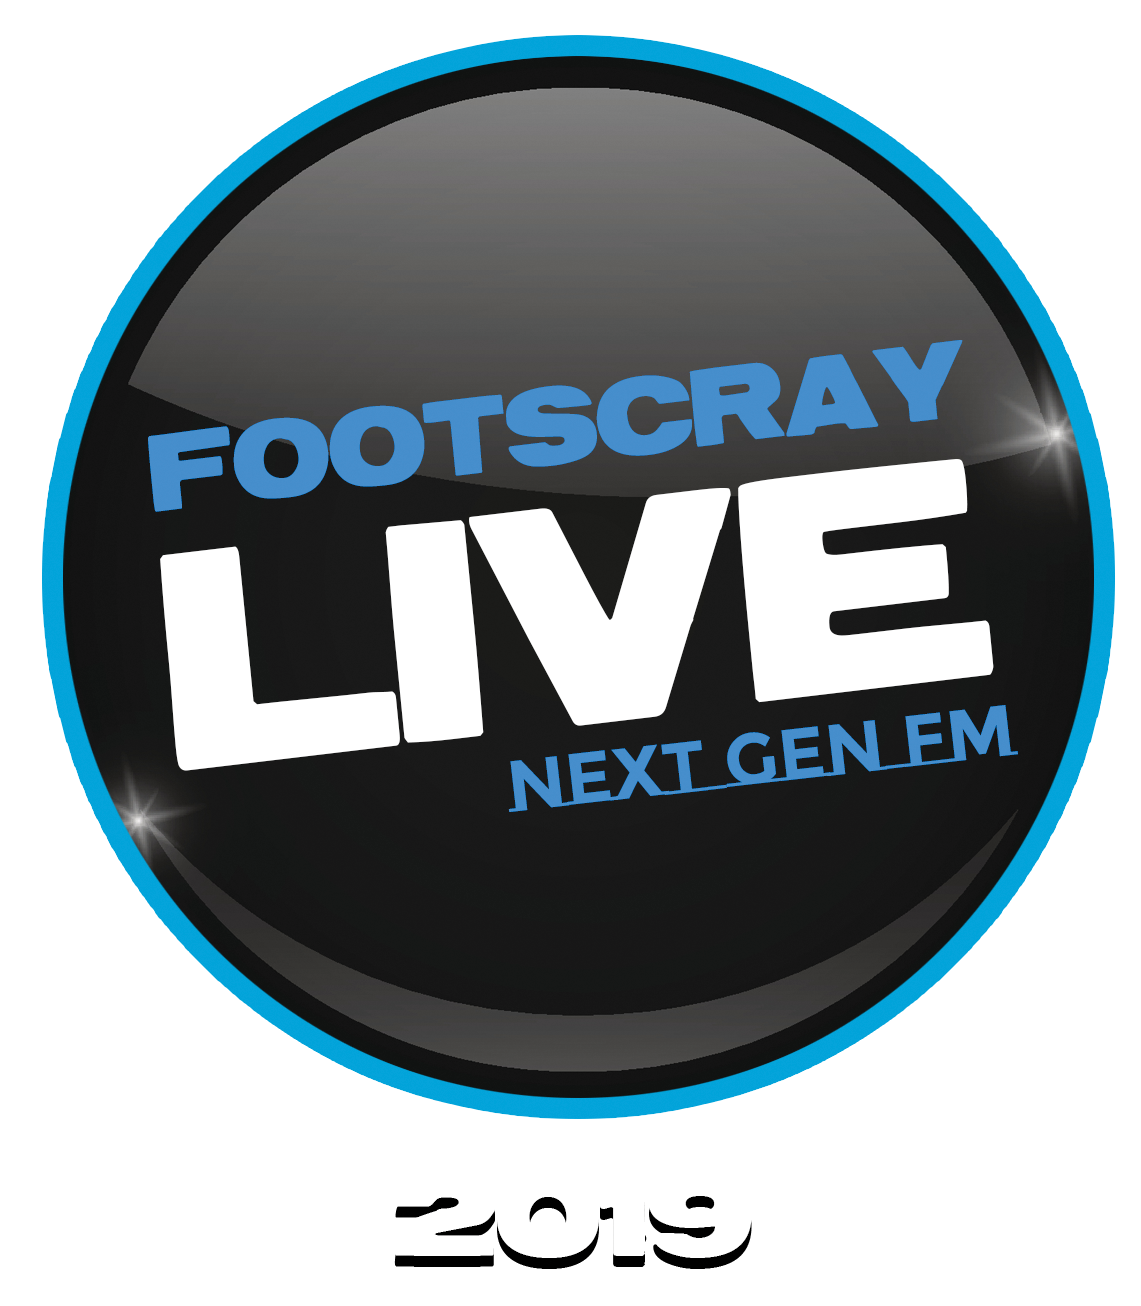 Footscray LIVE - logo.png